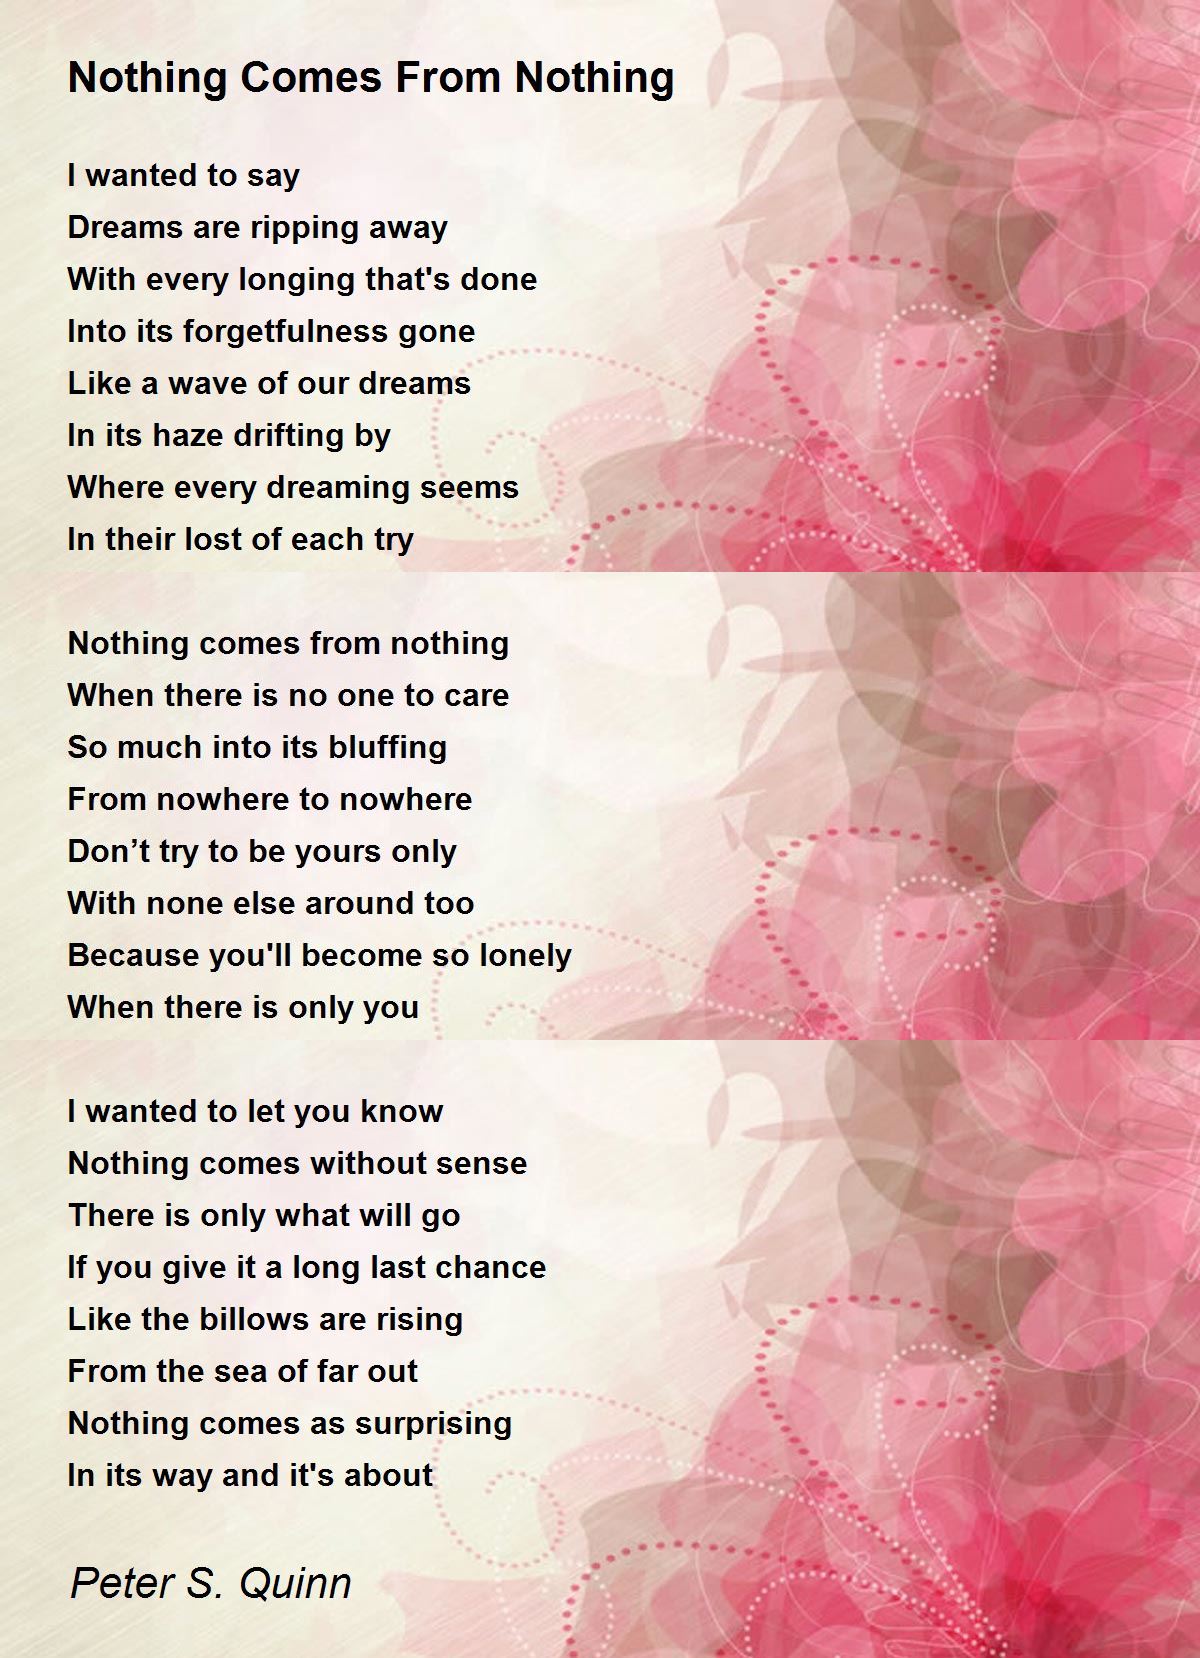 Nothing Comes From Nothing - Nothing Comes From Nothing Poem By Peter S. Quinn